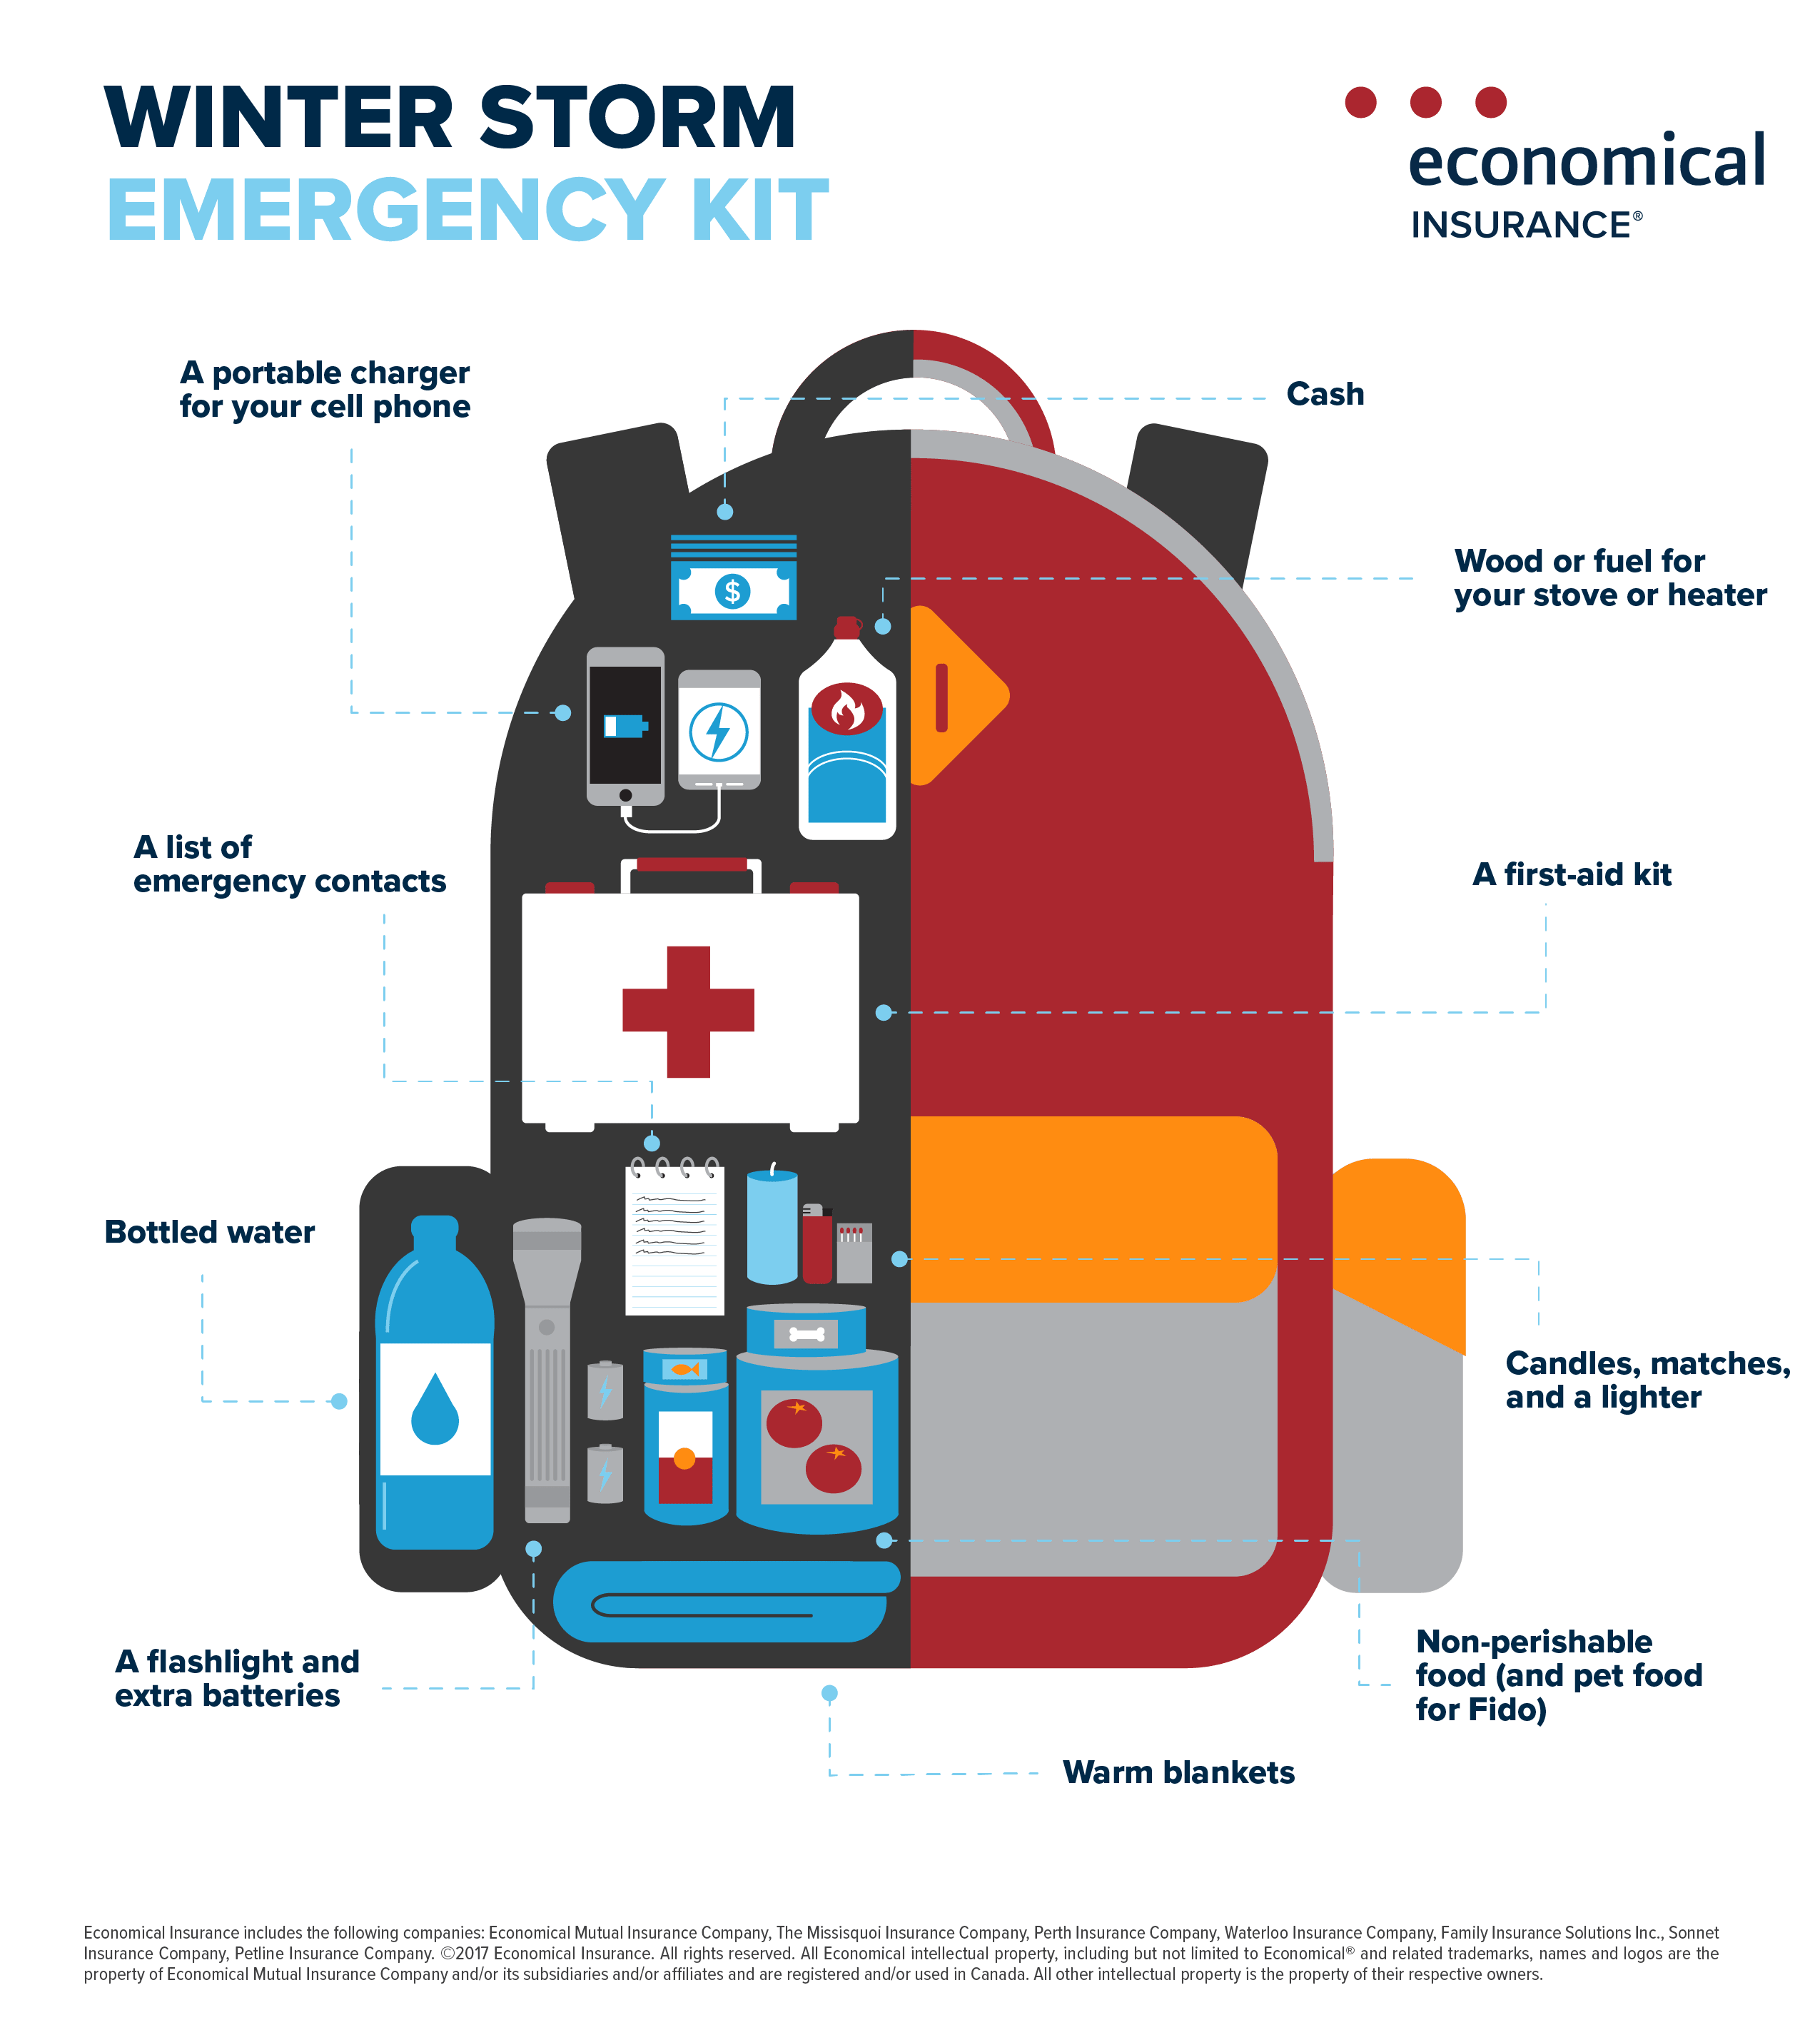 https://www.economical.com/ECOCOM/media/EcoComMedia/Site%20imagery/Blog/Blog%20entries/Winter-Storm-Emergency-Kit-infographic-ECO-min.png